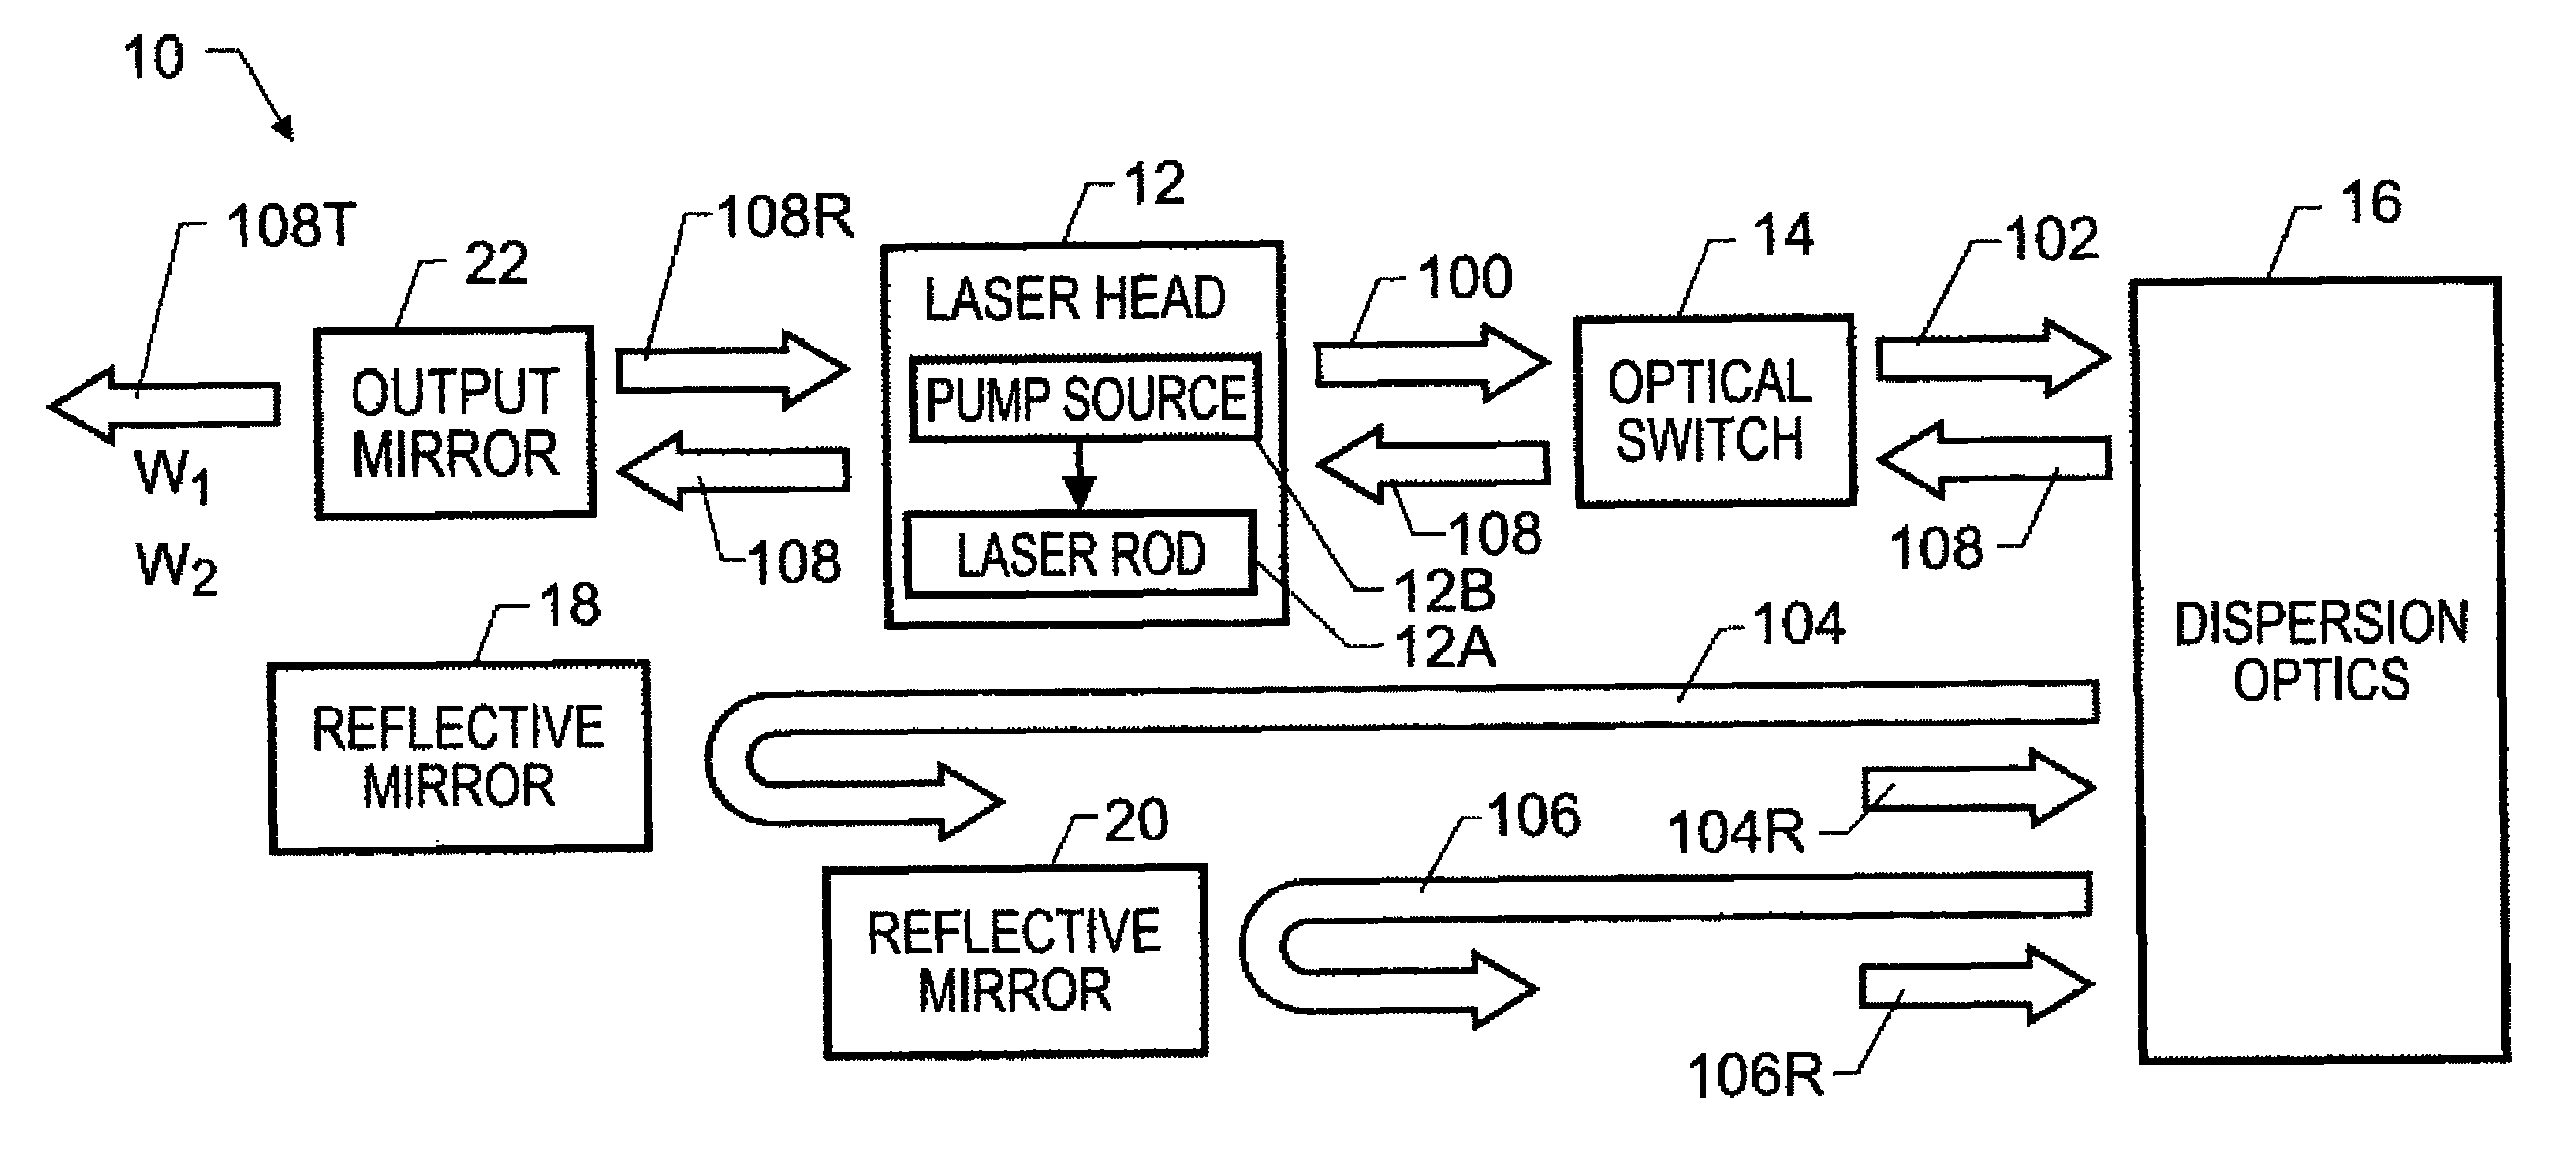 Multiple-wavelength tunable laser